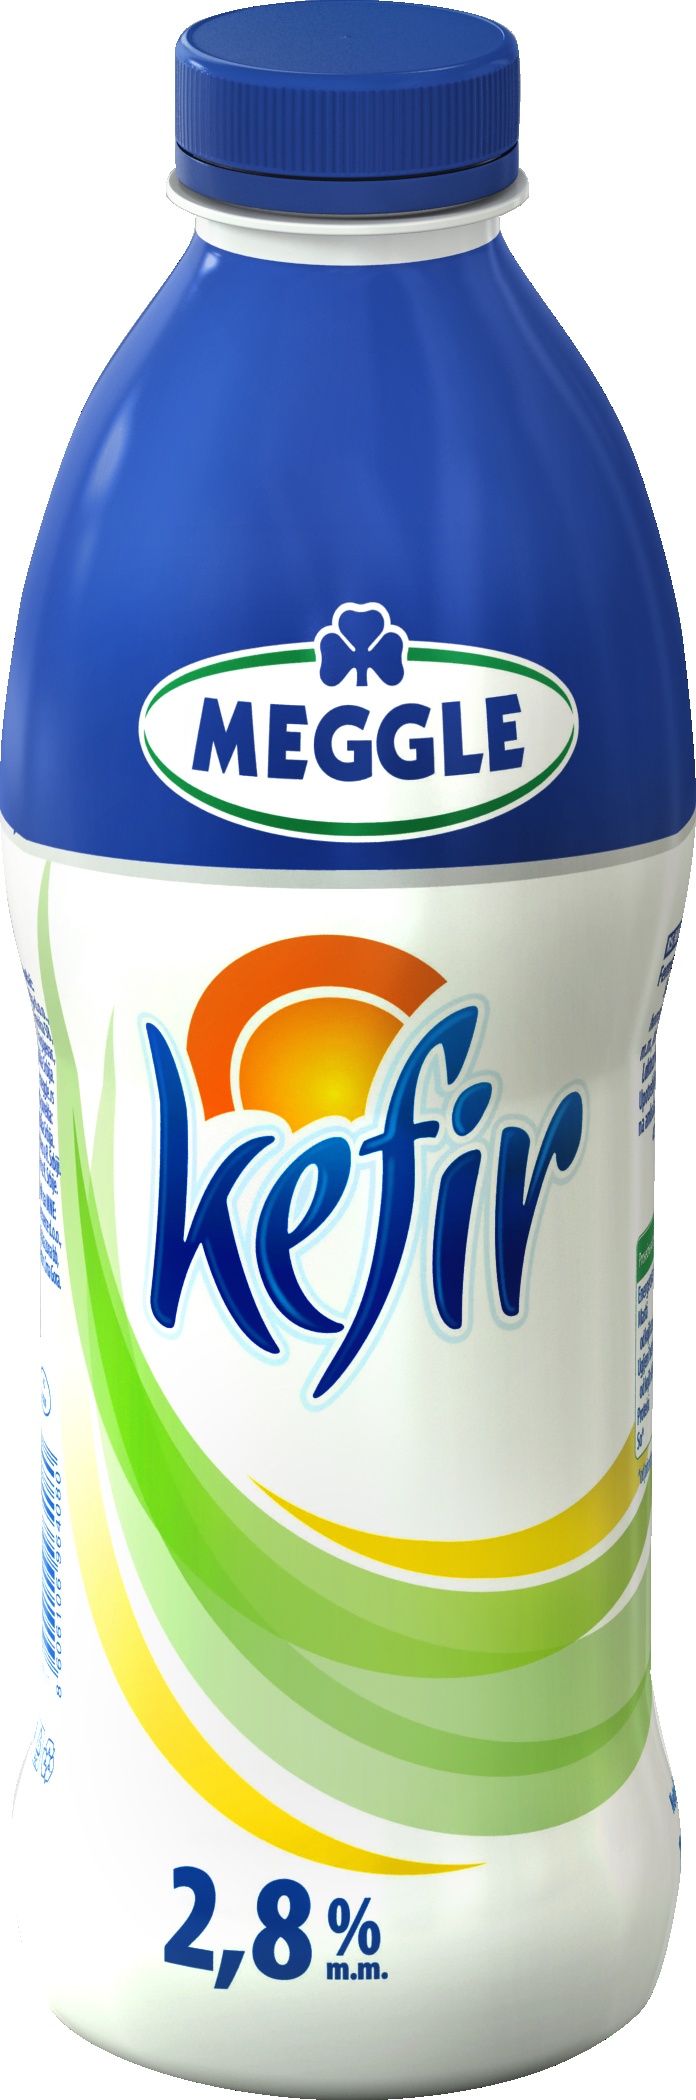 Slika za Kefir 2.8%mm Meggle 1l